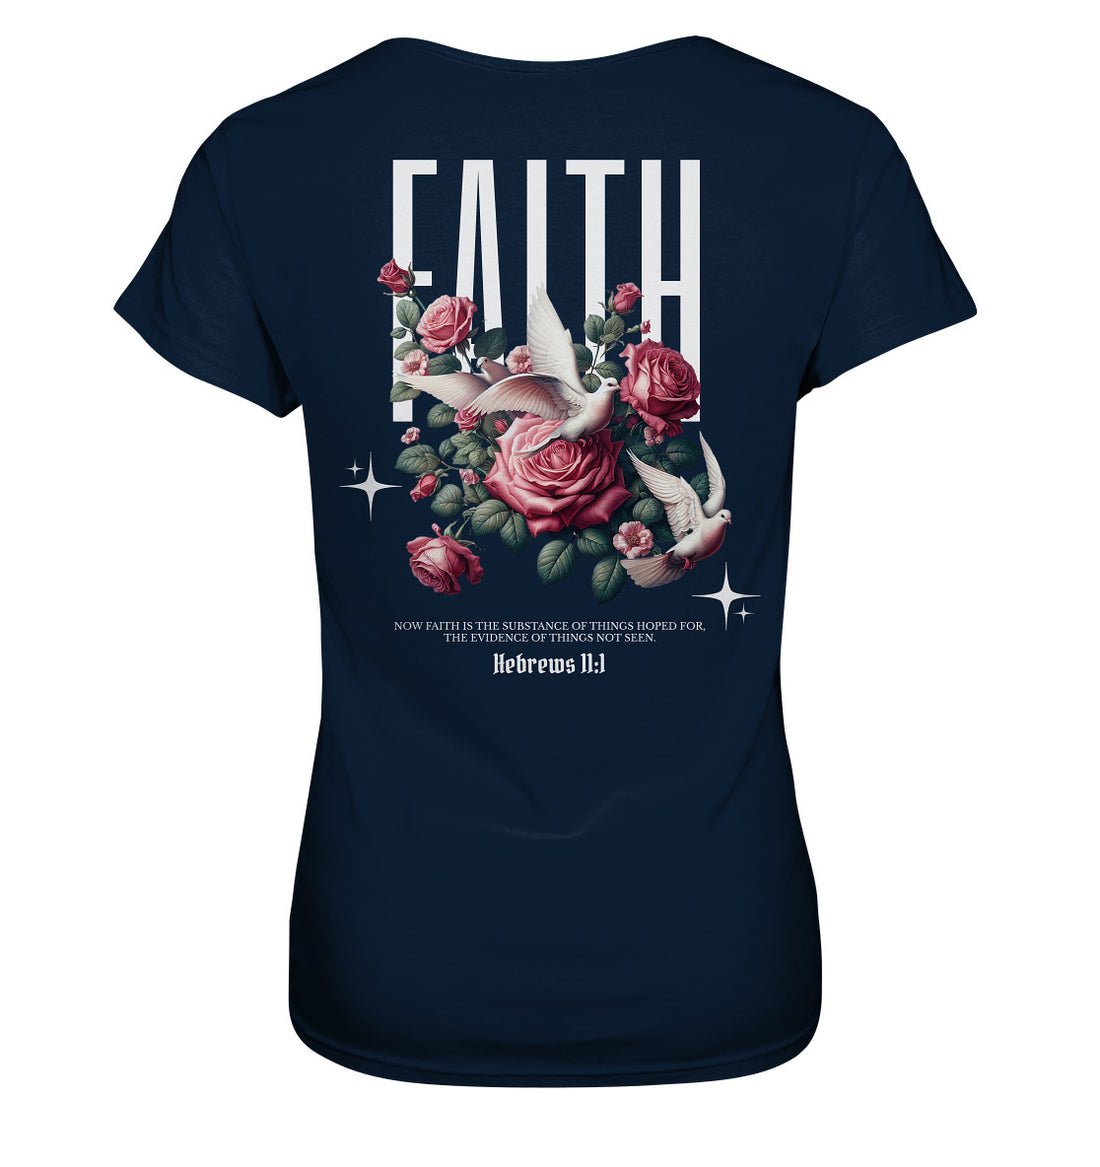 Hebr 11,1 - FAITH - Rückenprint - Ladies Premium Shirt